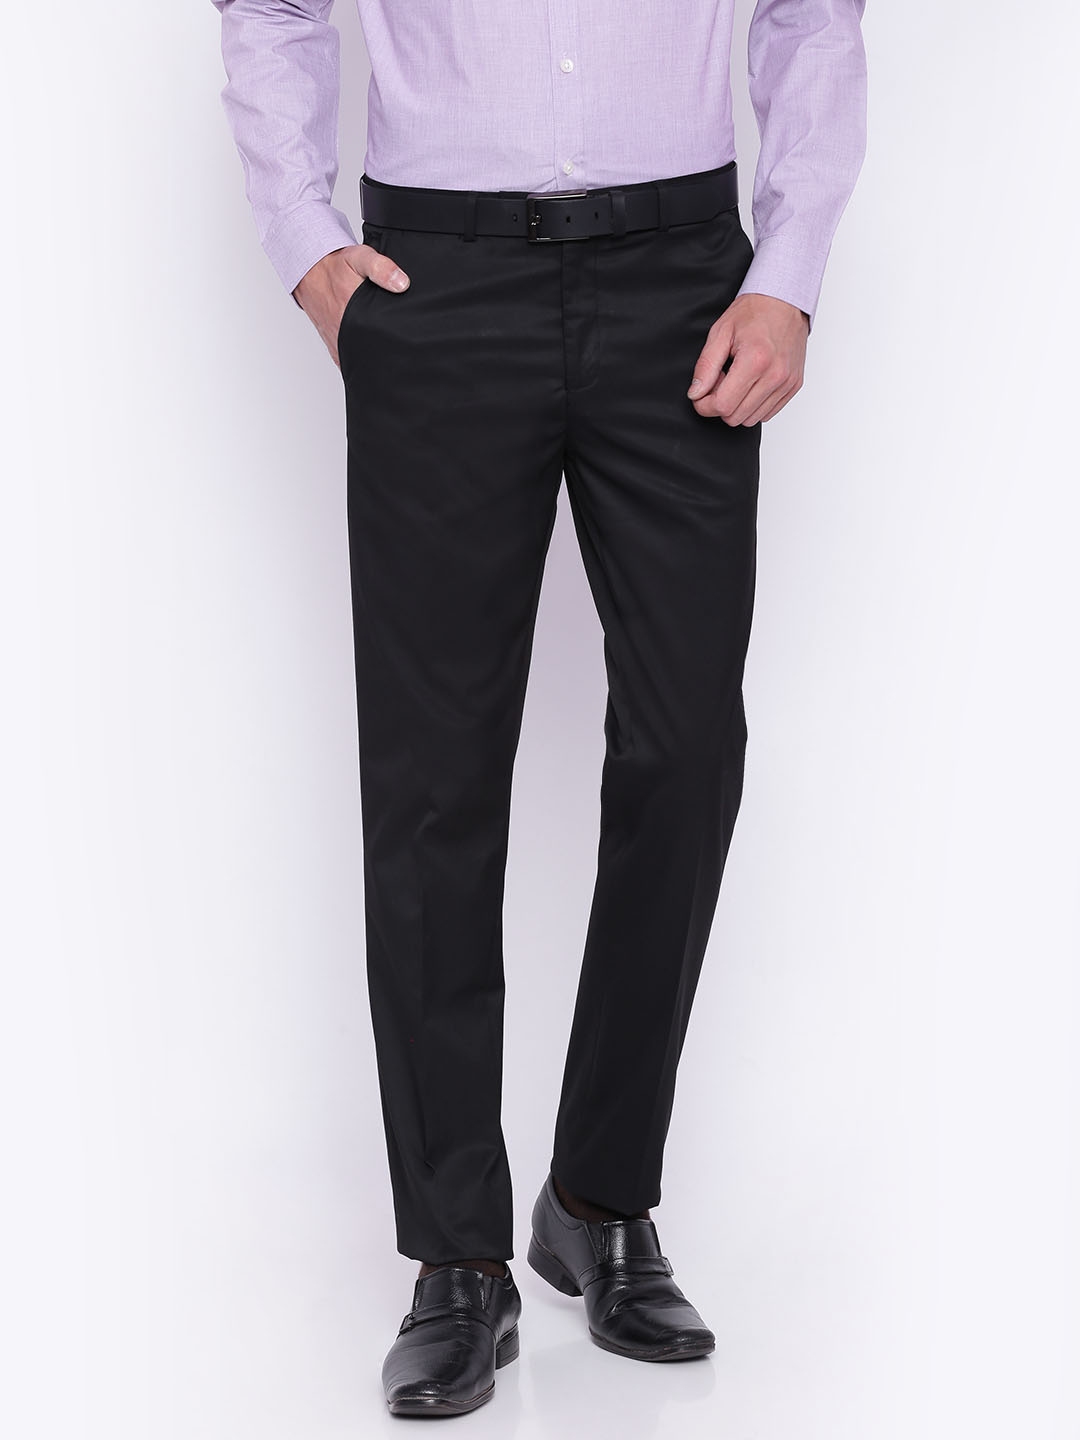 LeeMount Cotton Men Slim Fit Black Formal Trousers Size 2840 Inch